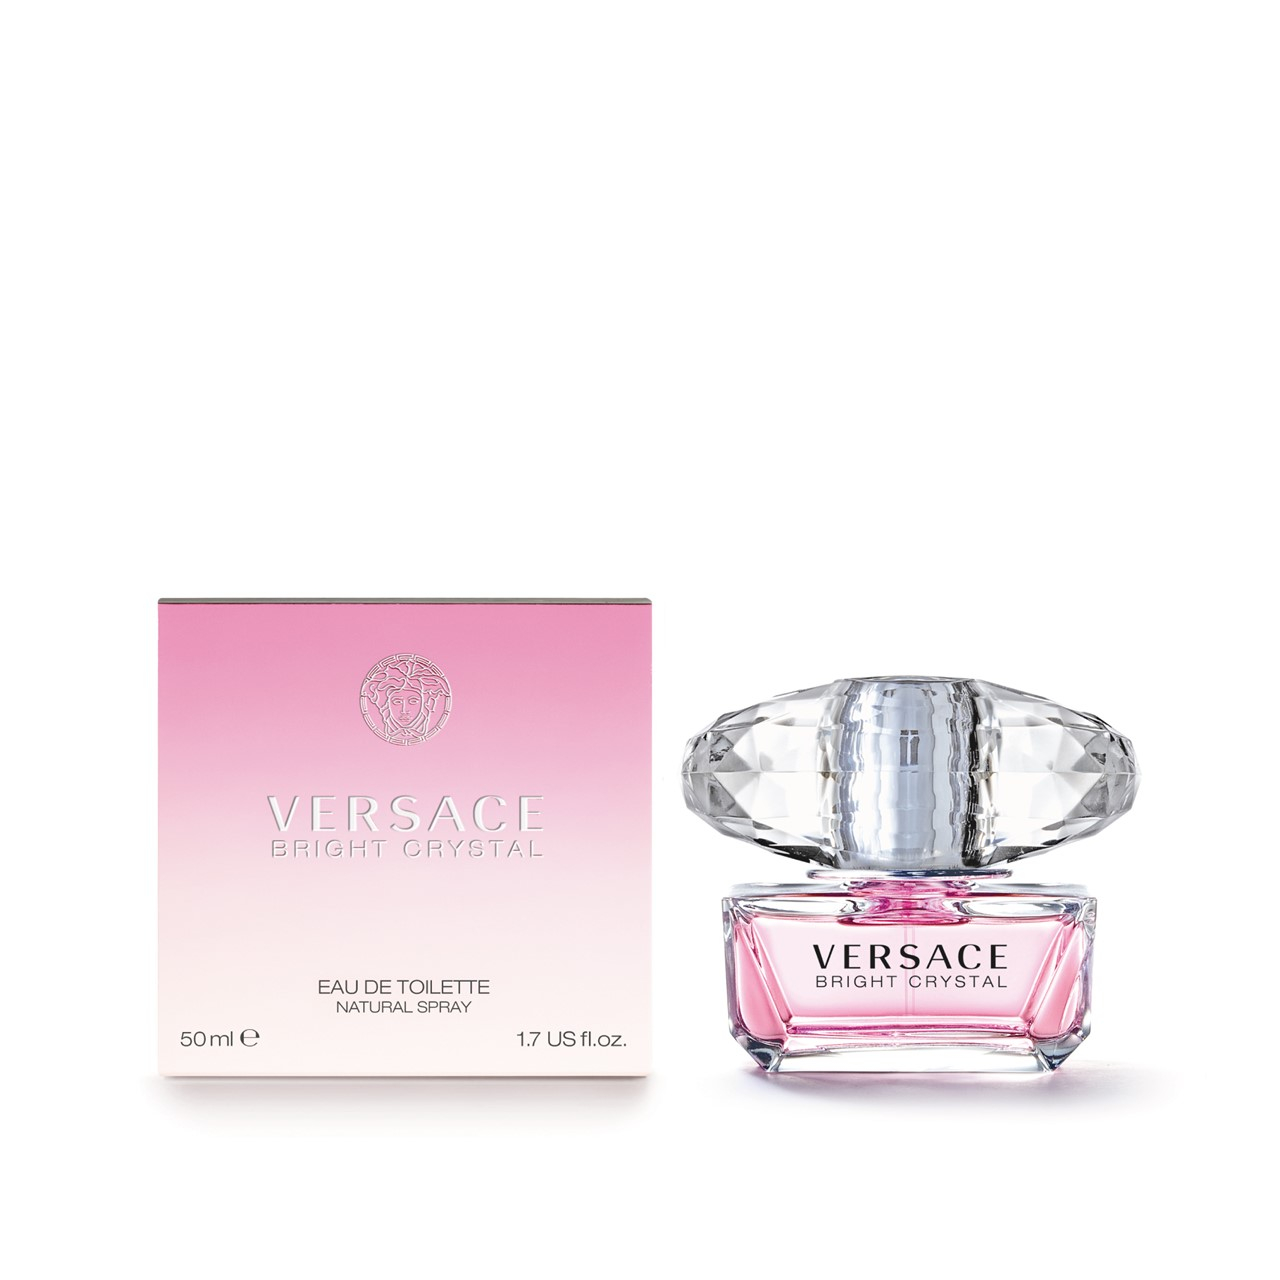 Buy Versace Bright de 50ml · USA Toilette Eau Crystal (1.7fl.oz.)